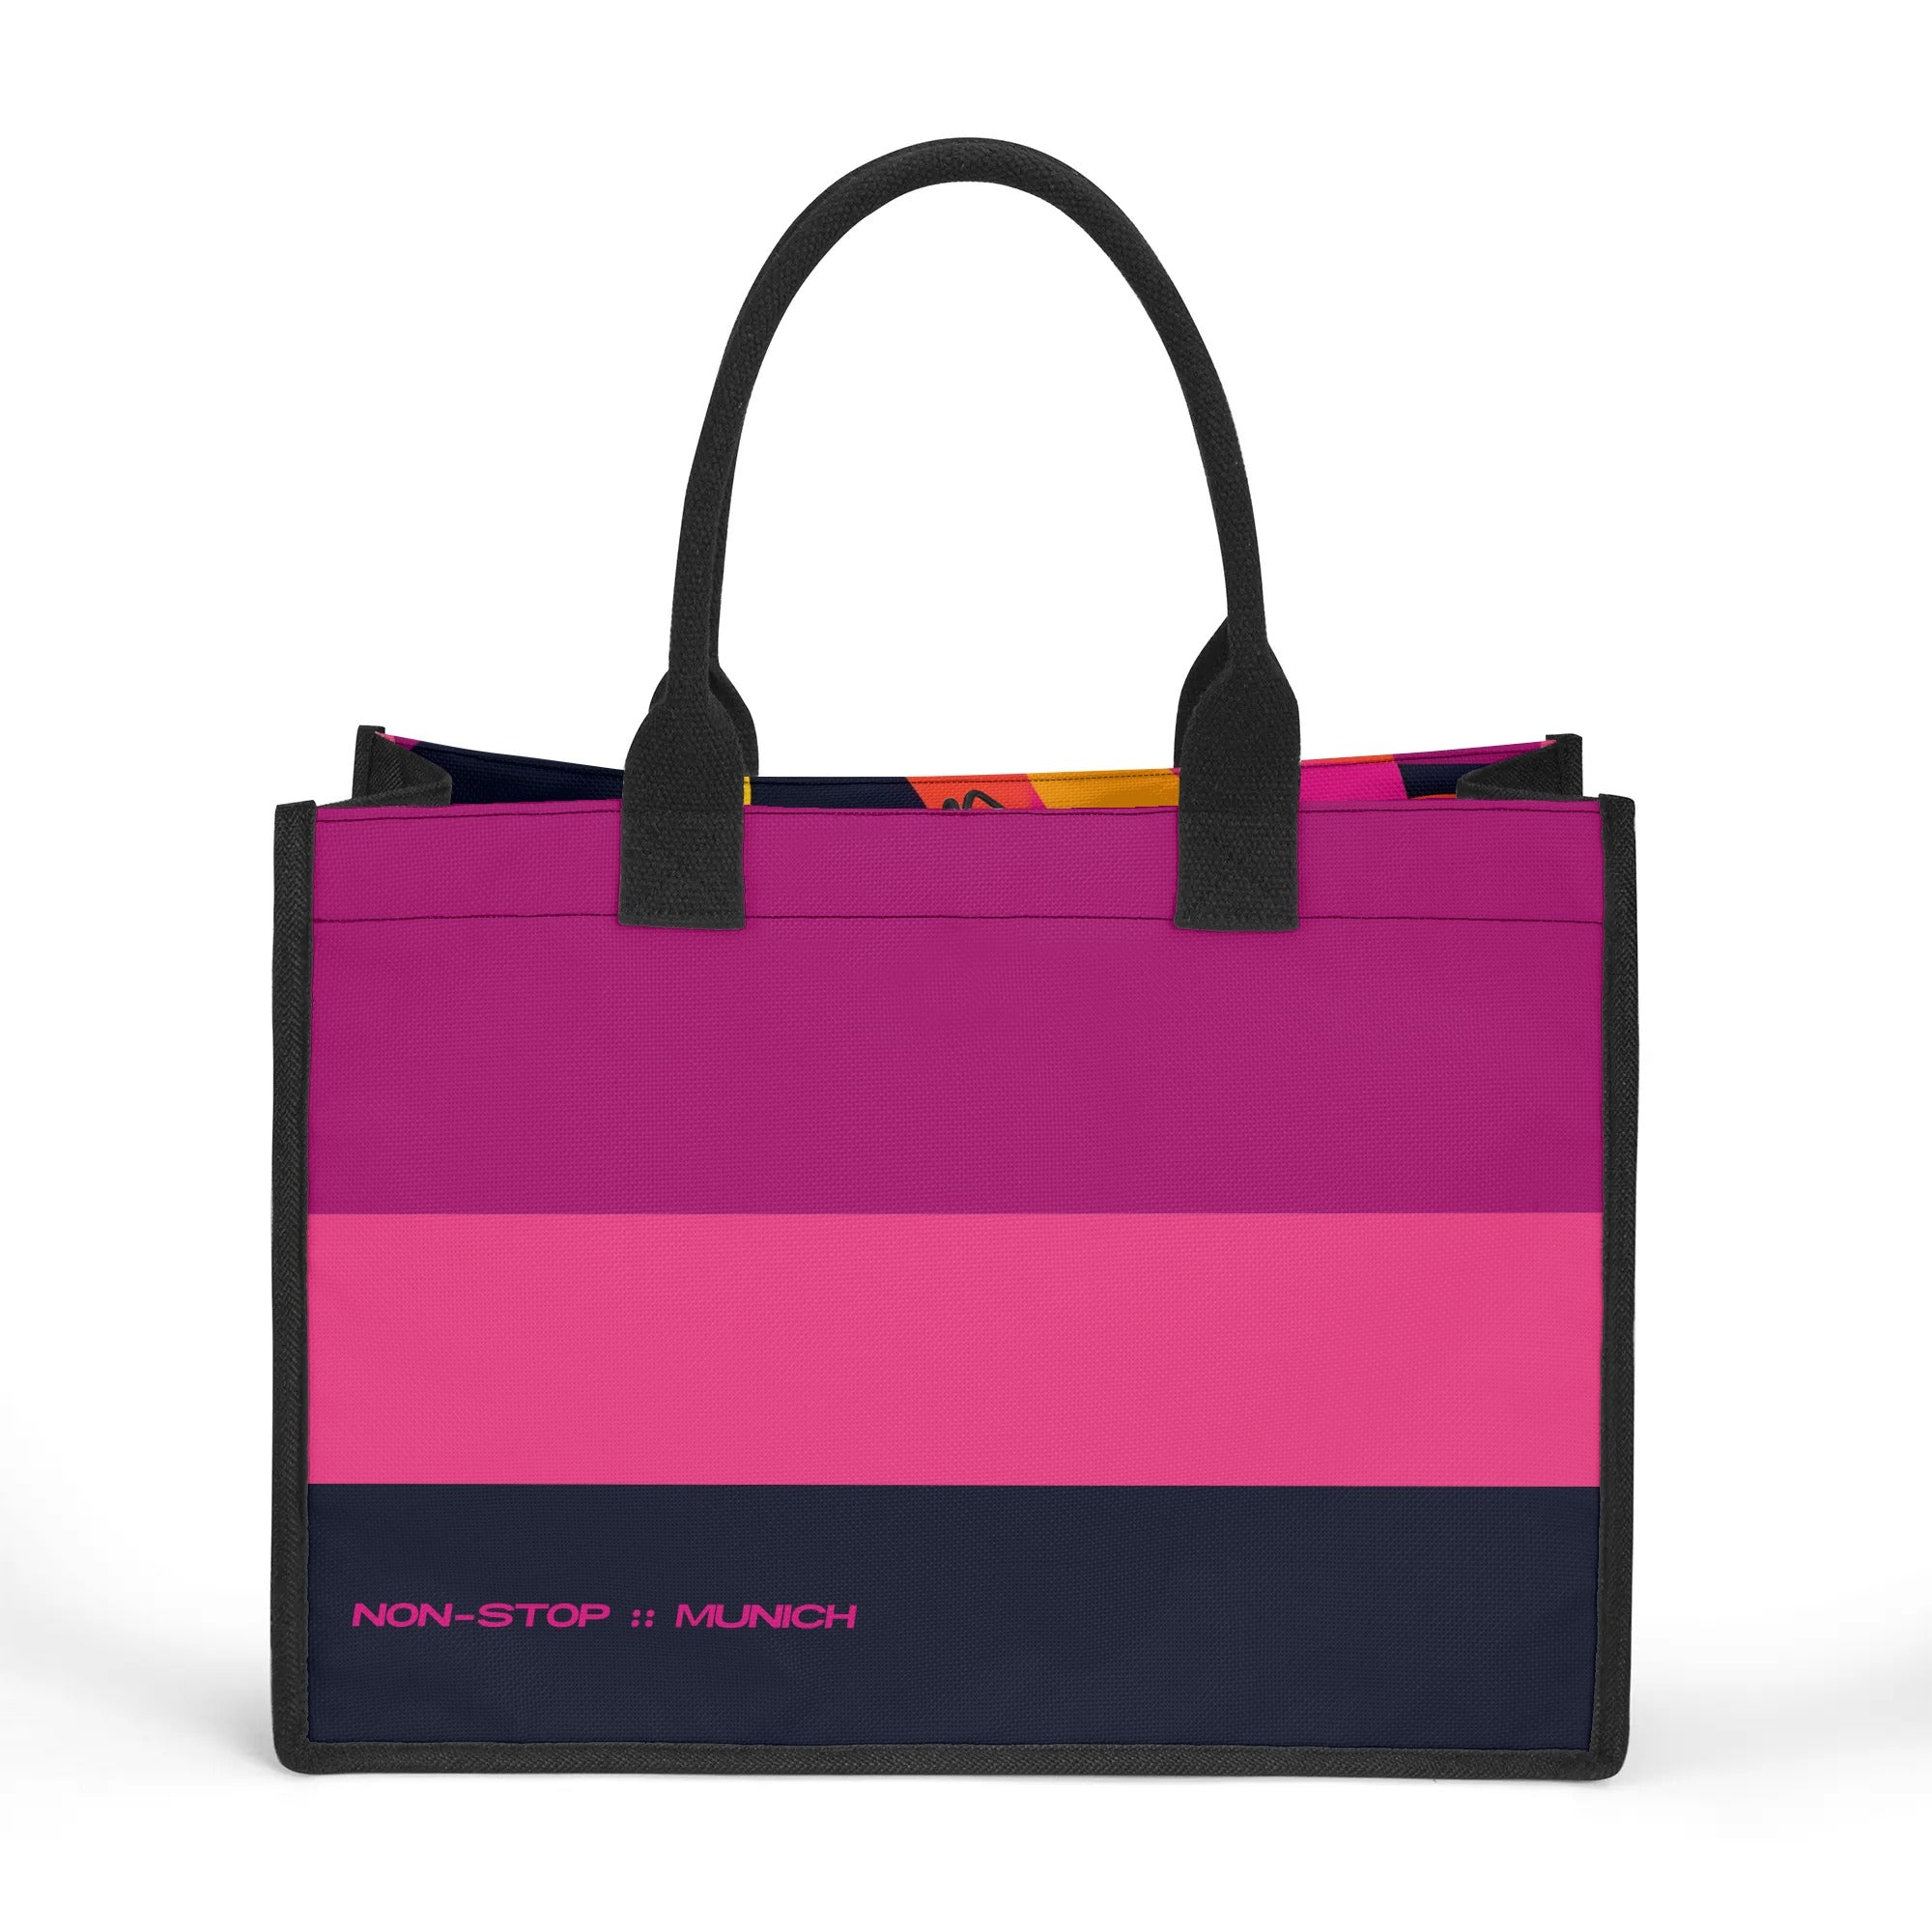 Multicolor Violet Pink Tote Bag Shopper Travel Tote Canvas Striped Color Block Everyday Designer Tote Bag Handbag Munich Airline Series Blissfully Brand